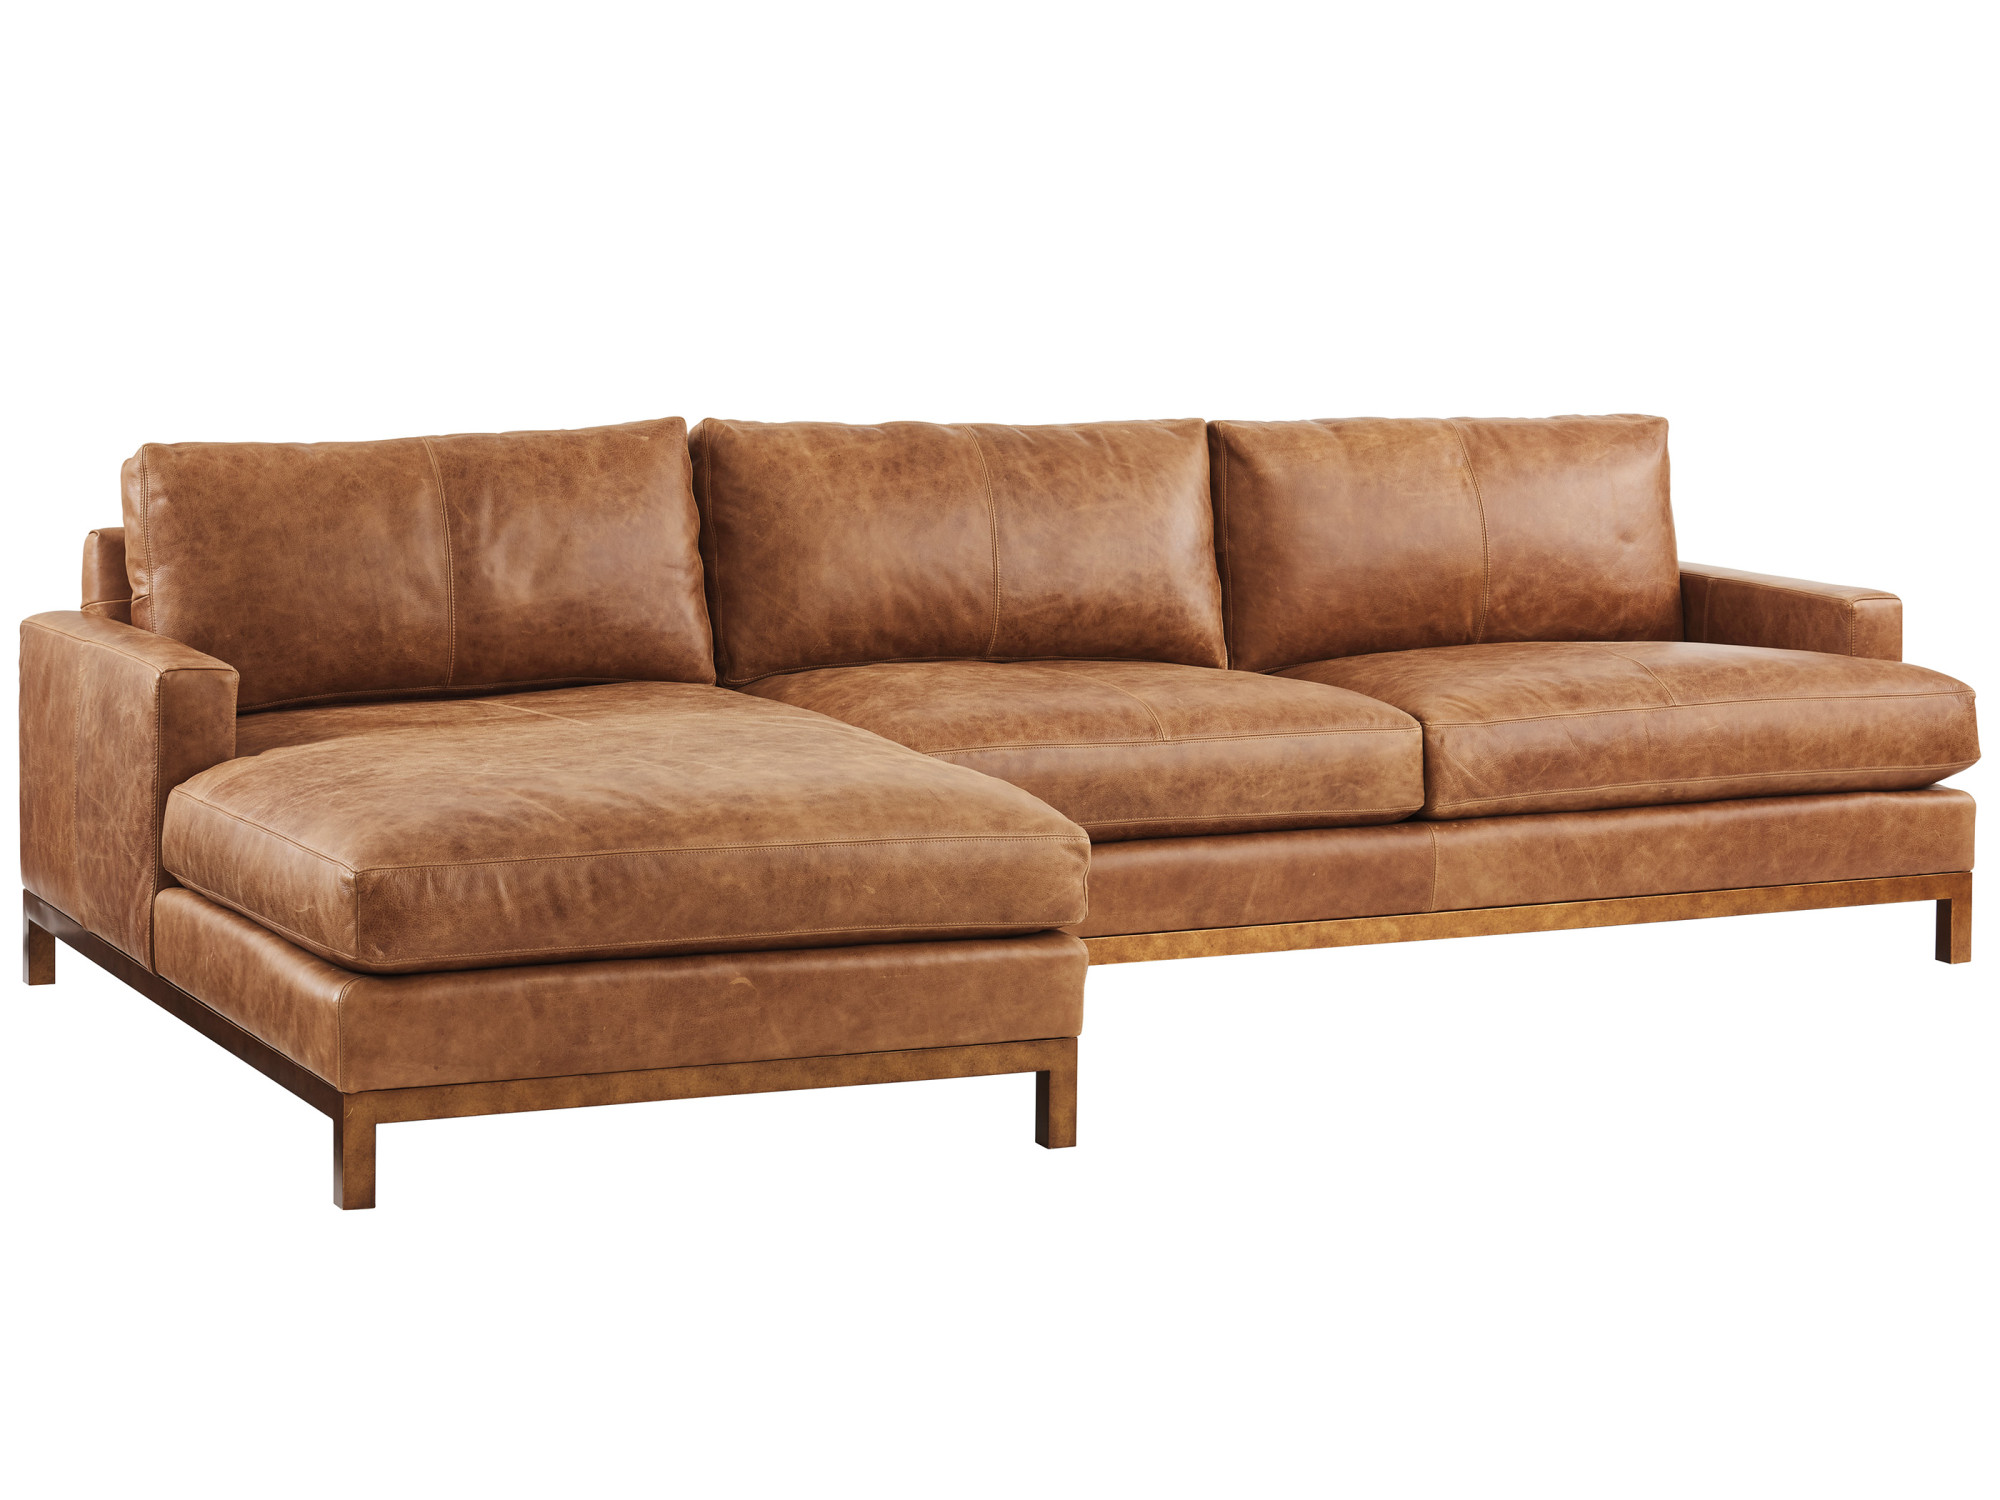 Horizon Leather Sofa Chaise Lexington, Leather Couch Chaise